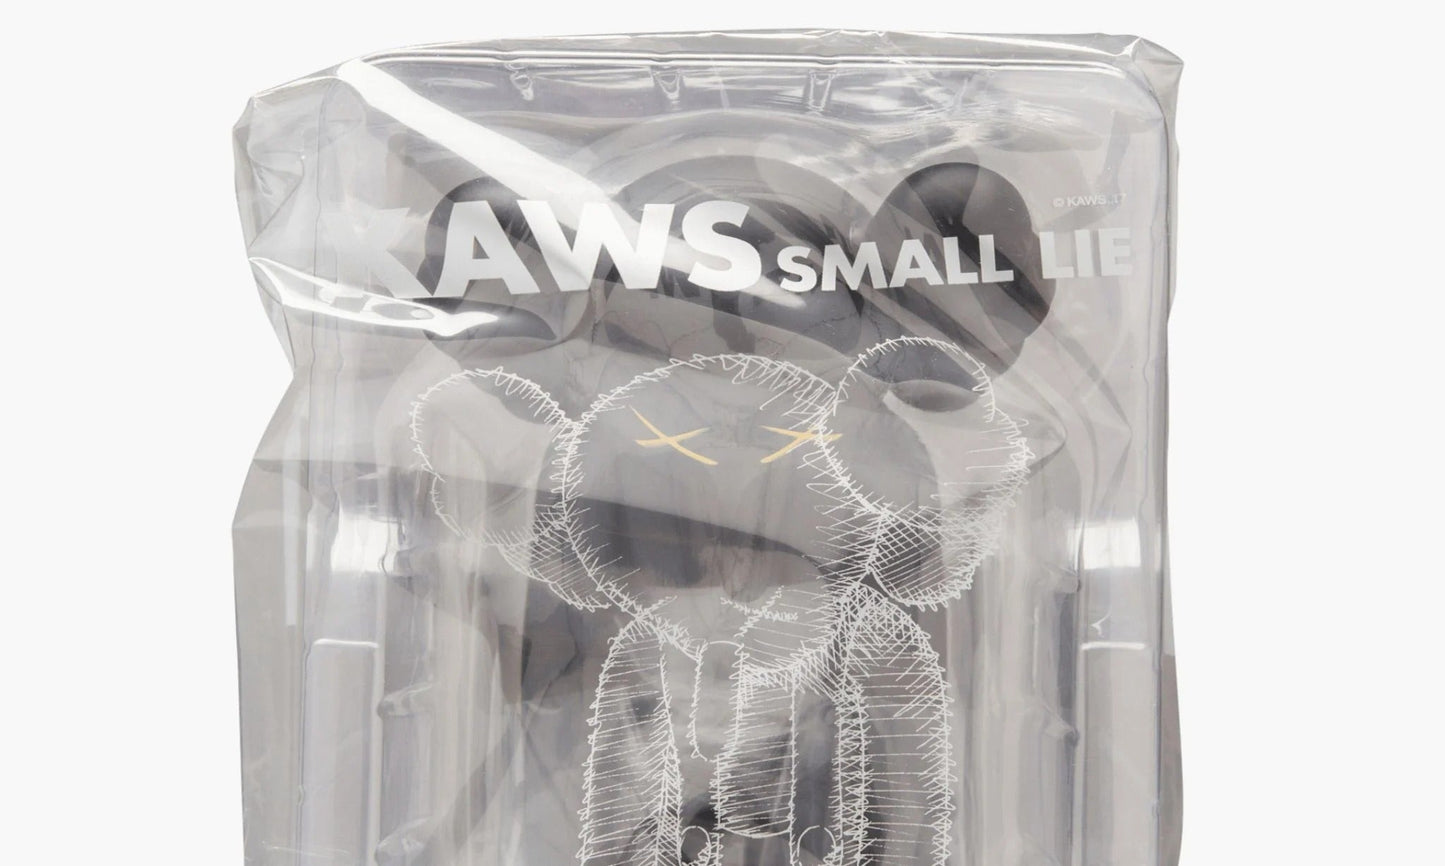 KAWS Small Lie Companion Vinyl Figure Black | The Sortage